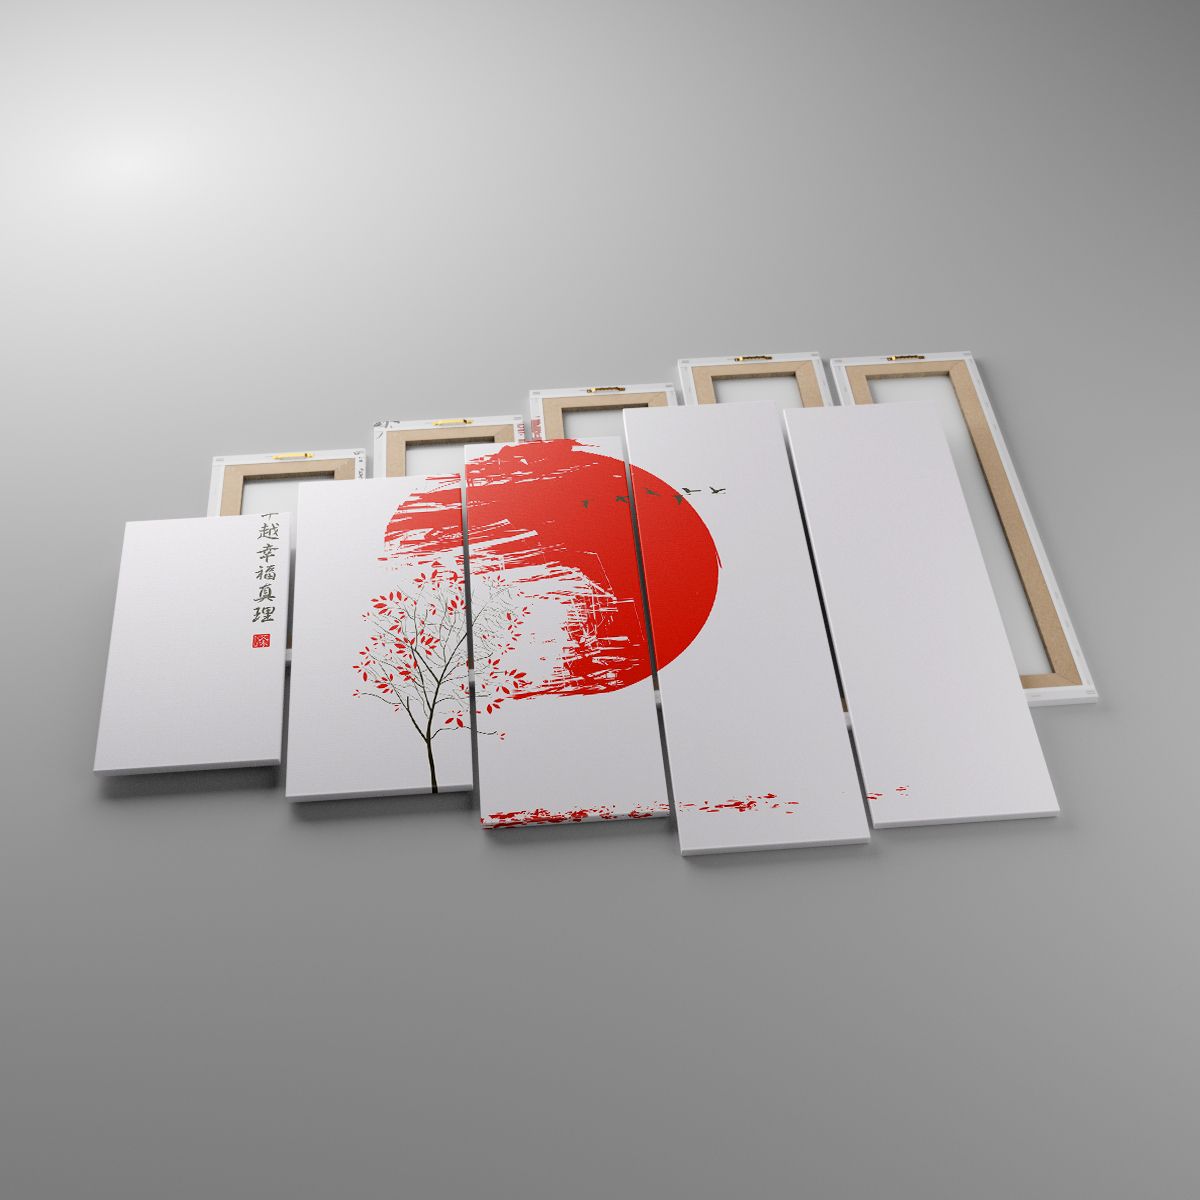 Leinwandbild Abstraktion, Leinwandbild Japan, Leinwandbild Kirschblüte, Leinwandbild Grafik, Leinwandbild Der Sonnenuntergang